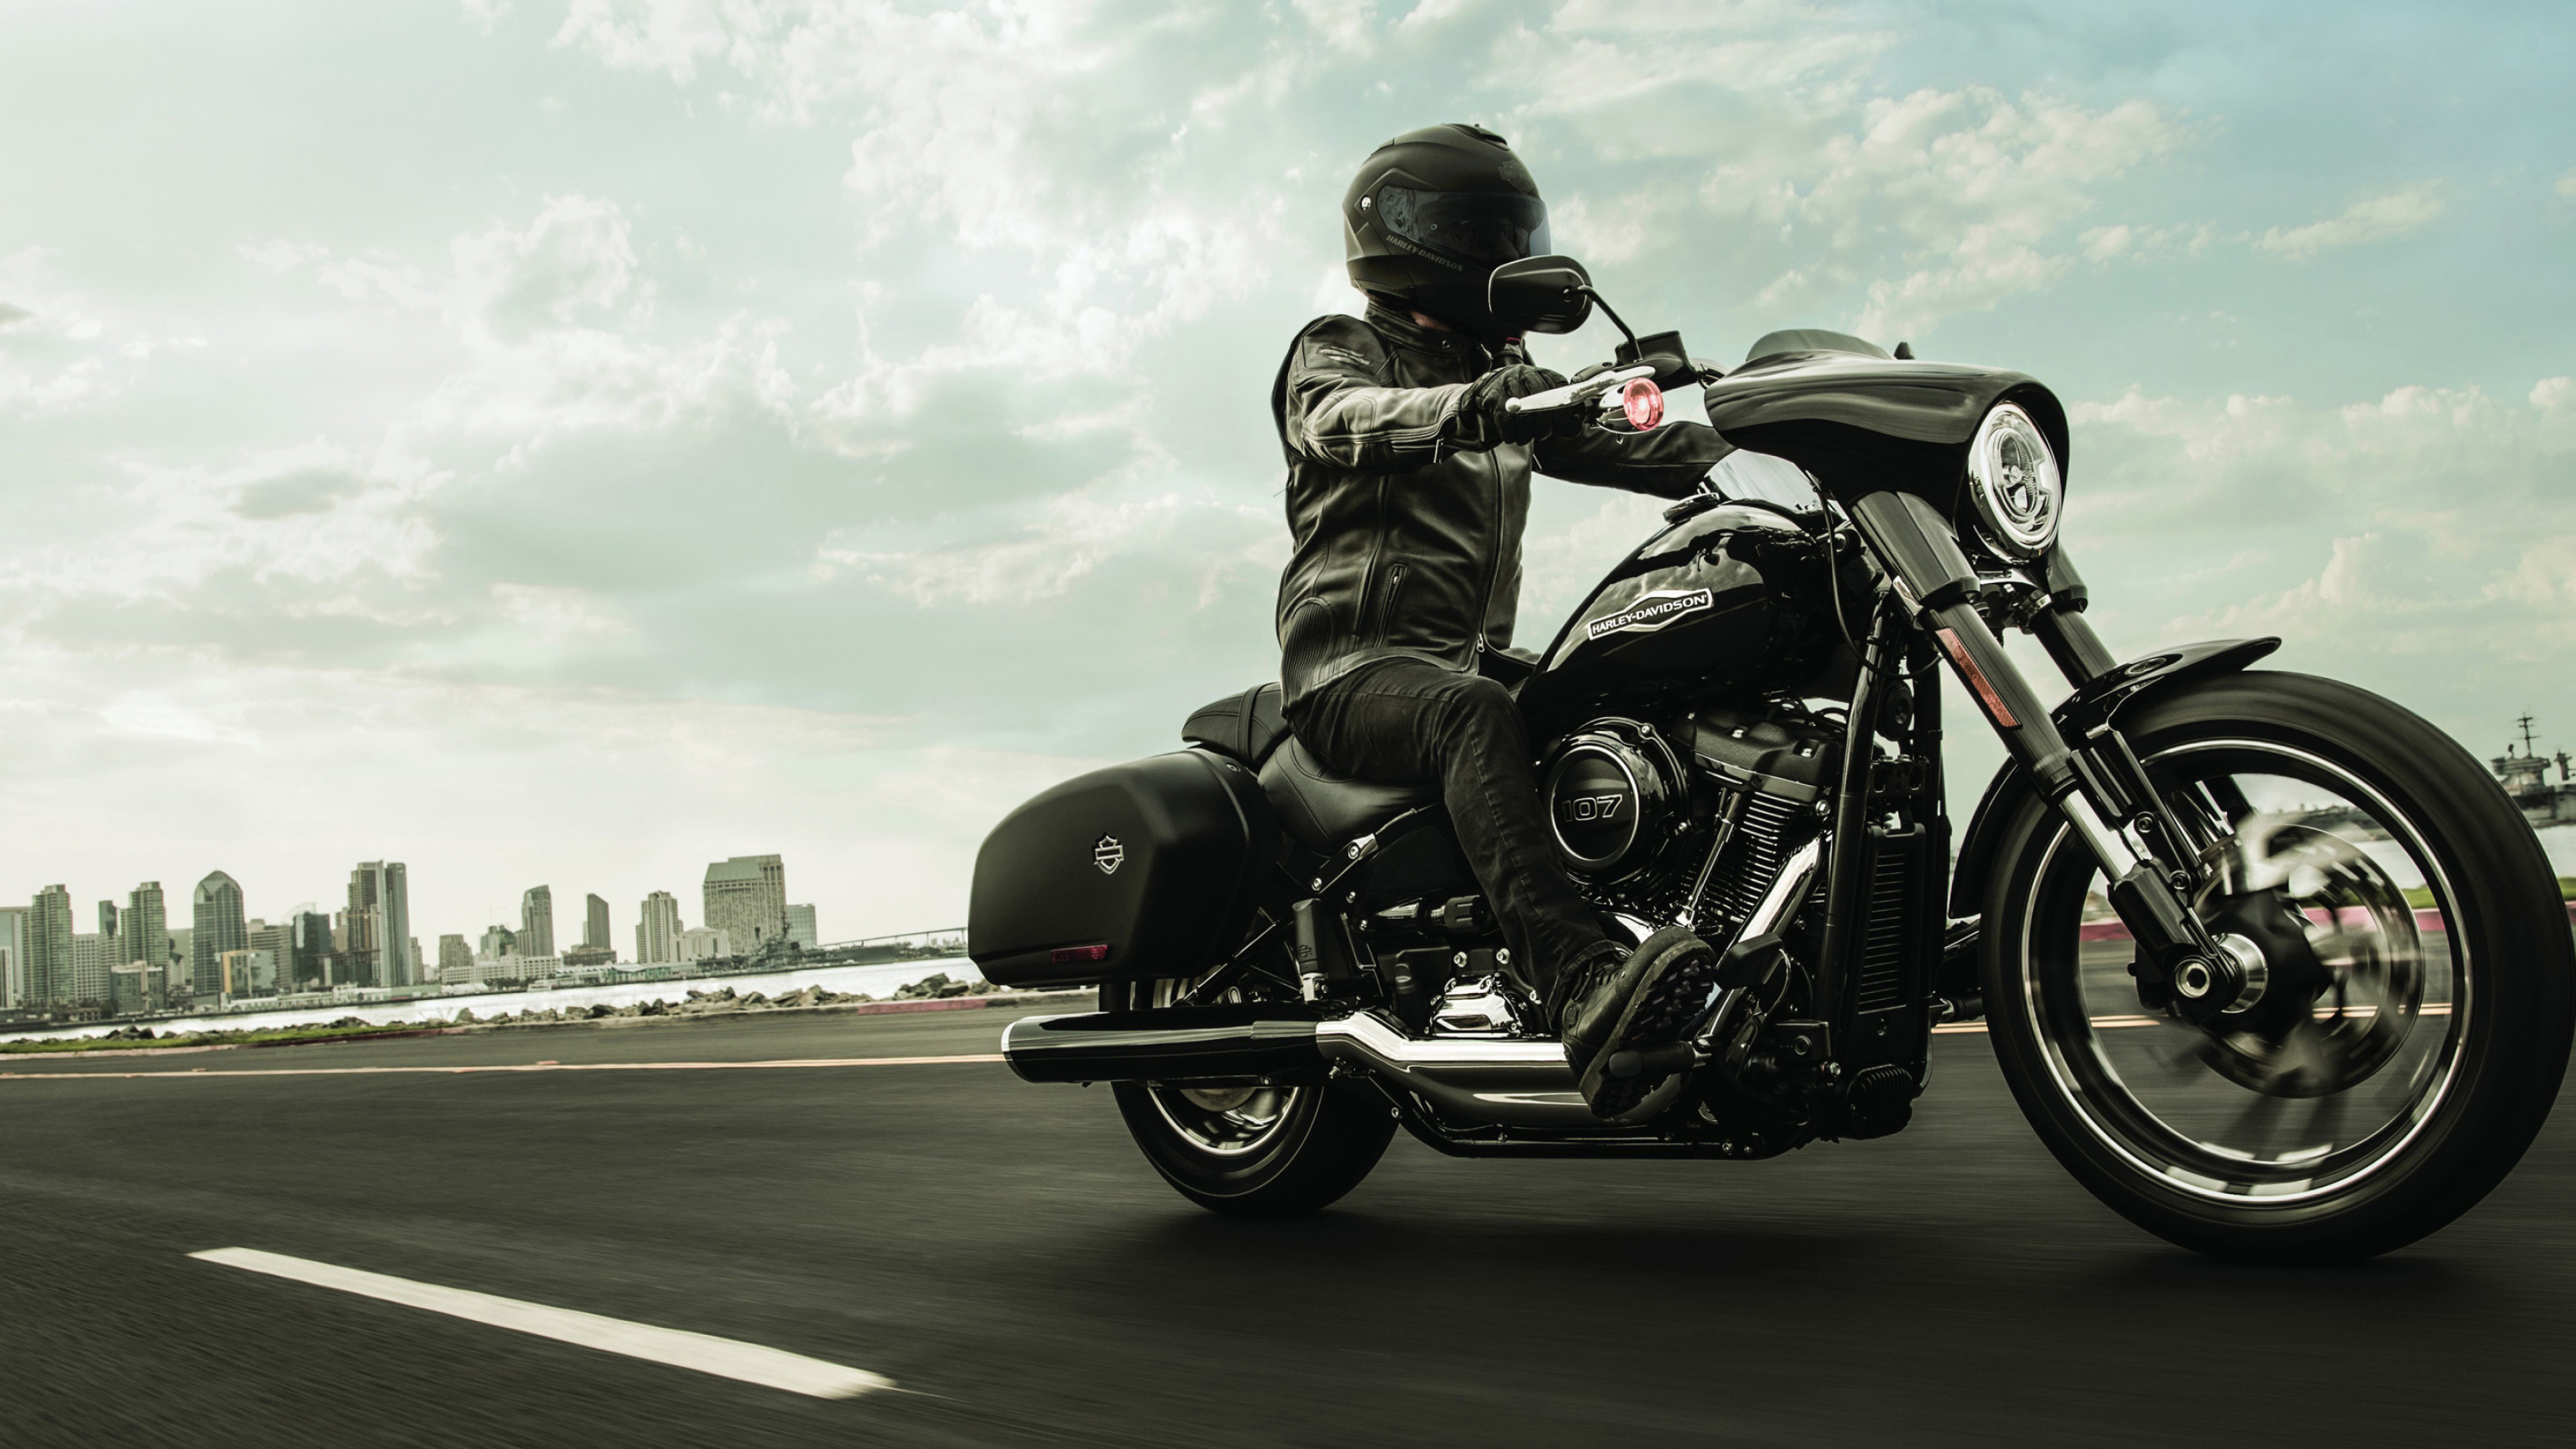 Harley-Davidson Sport Glide, Adventure motorcycle, All-purpose ride, Stylish cruiser, 3840x2160 4K Desktop